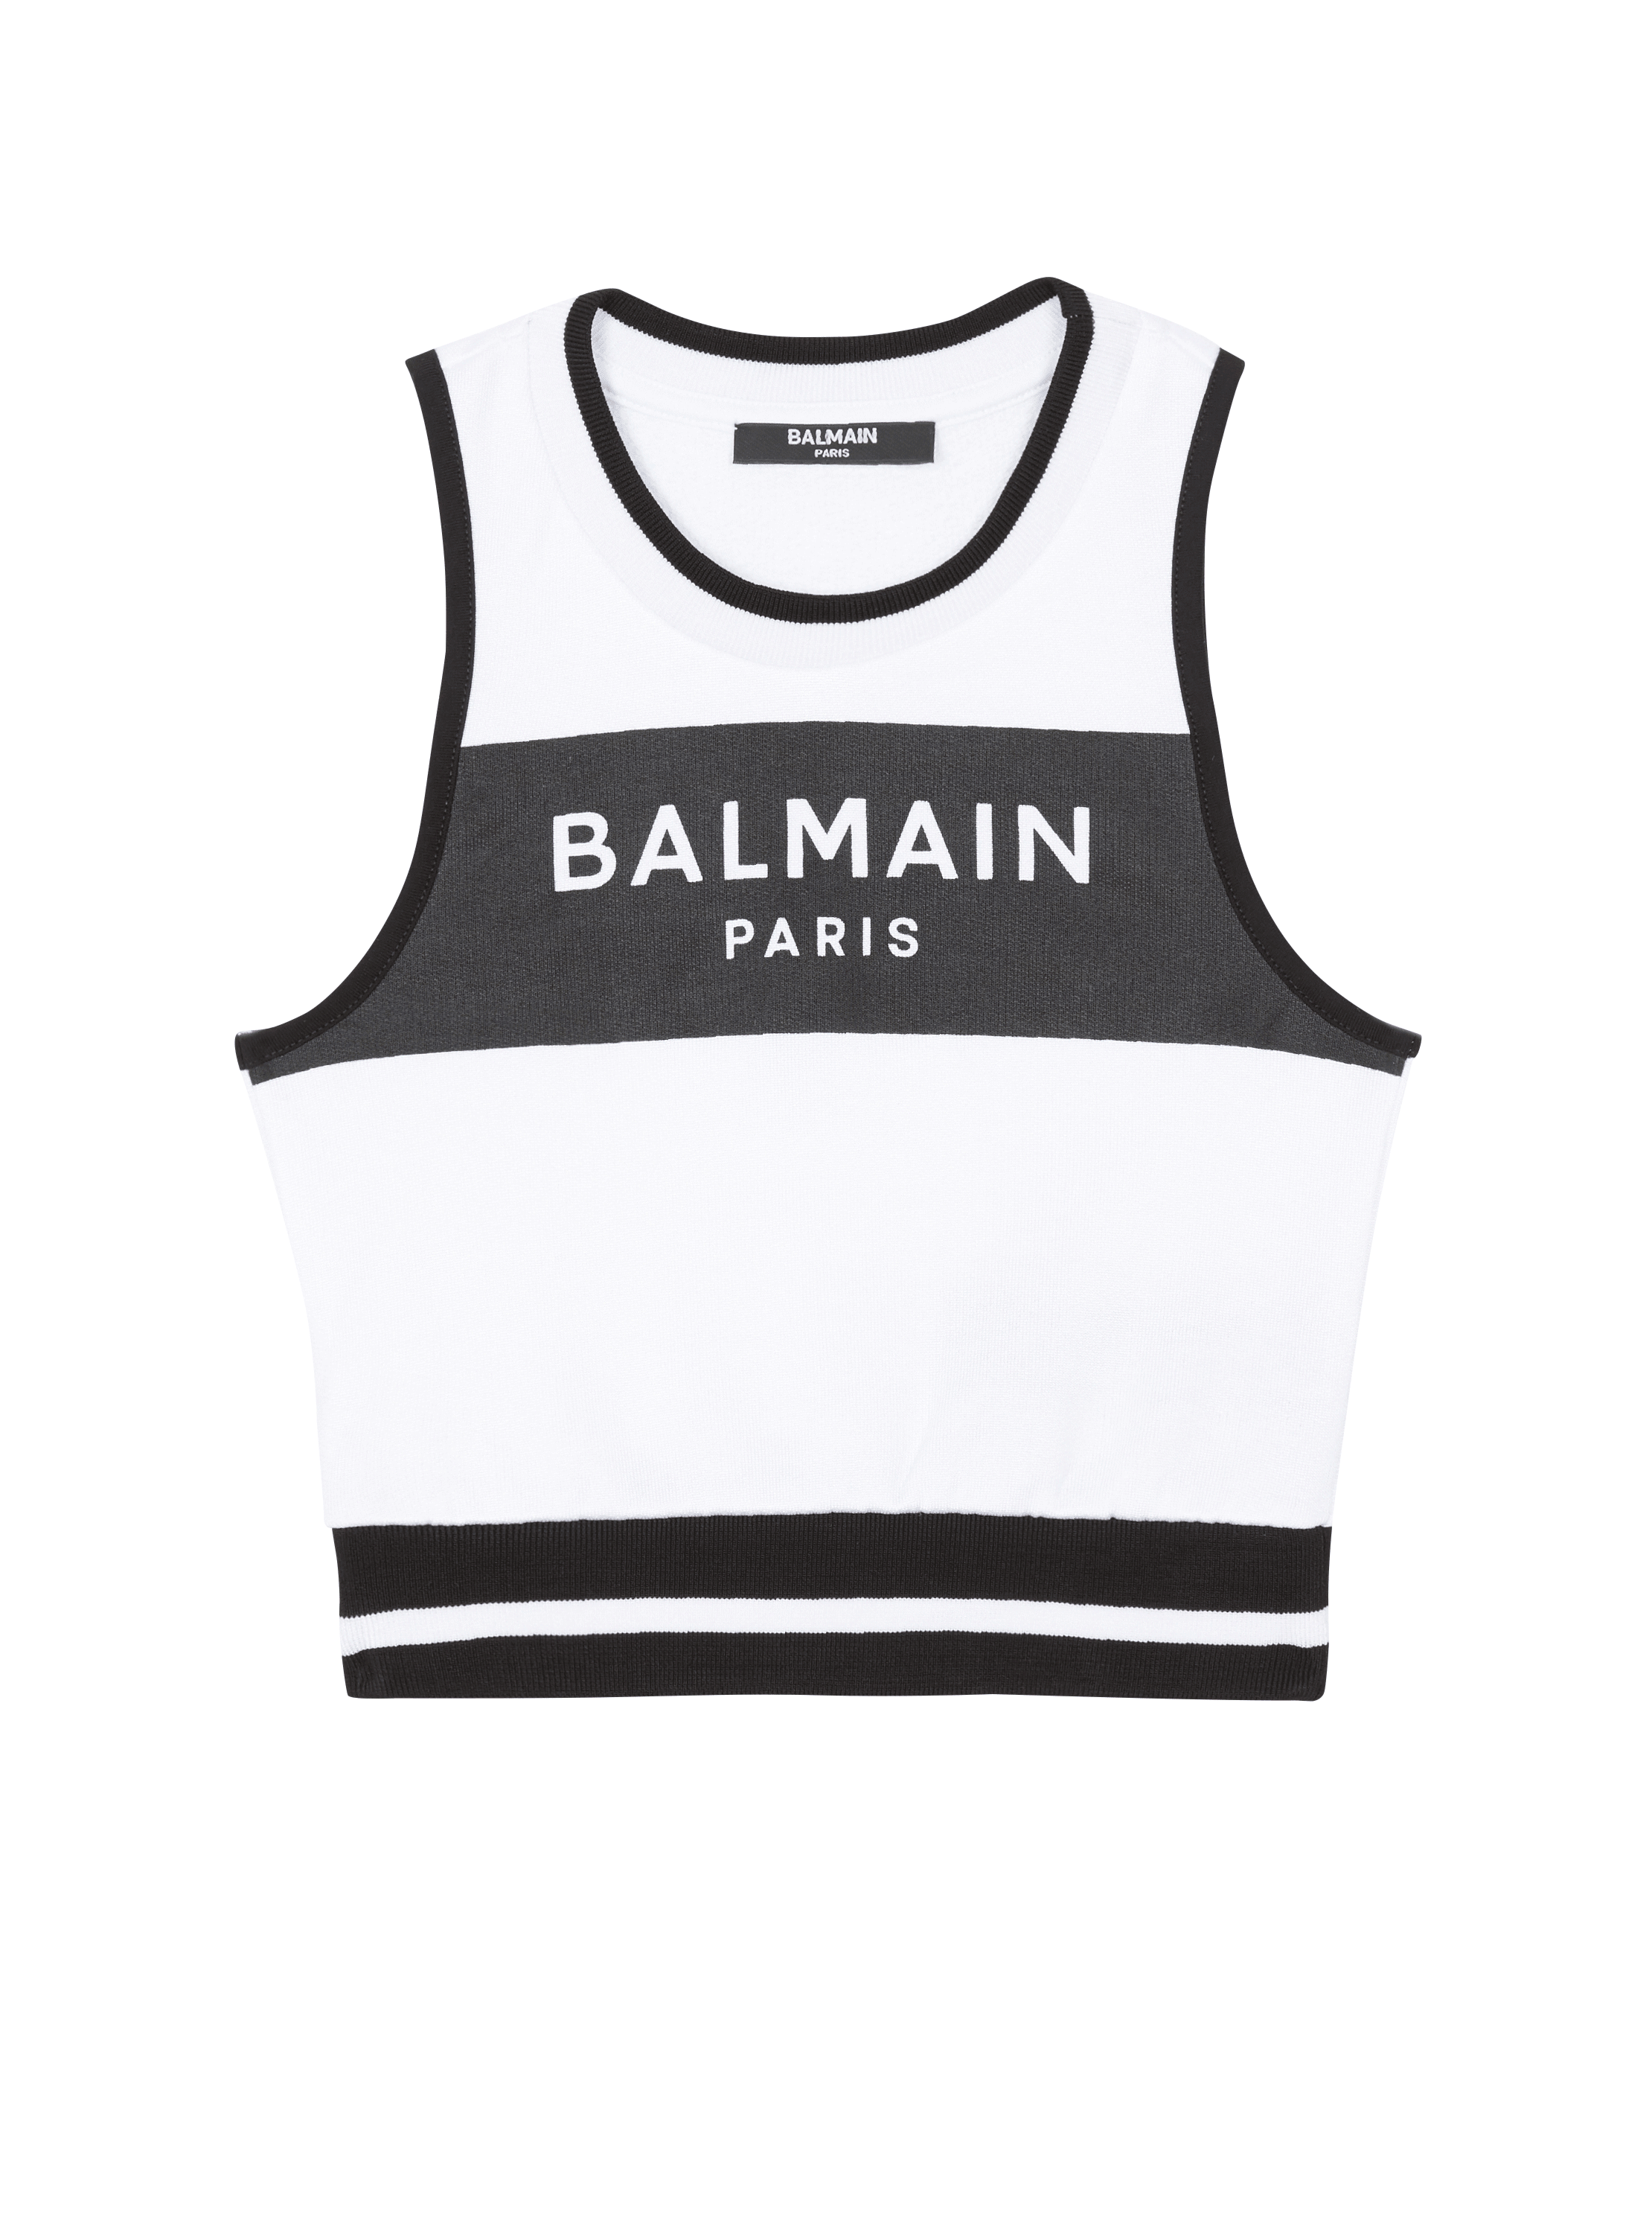 Balmain Paris sweater white - Child | BALMAIN